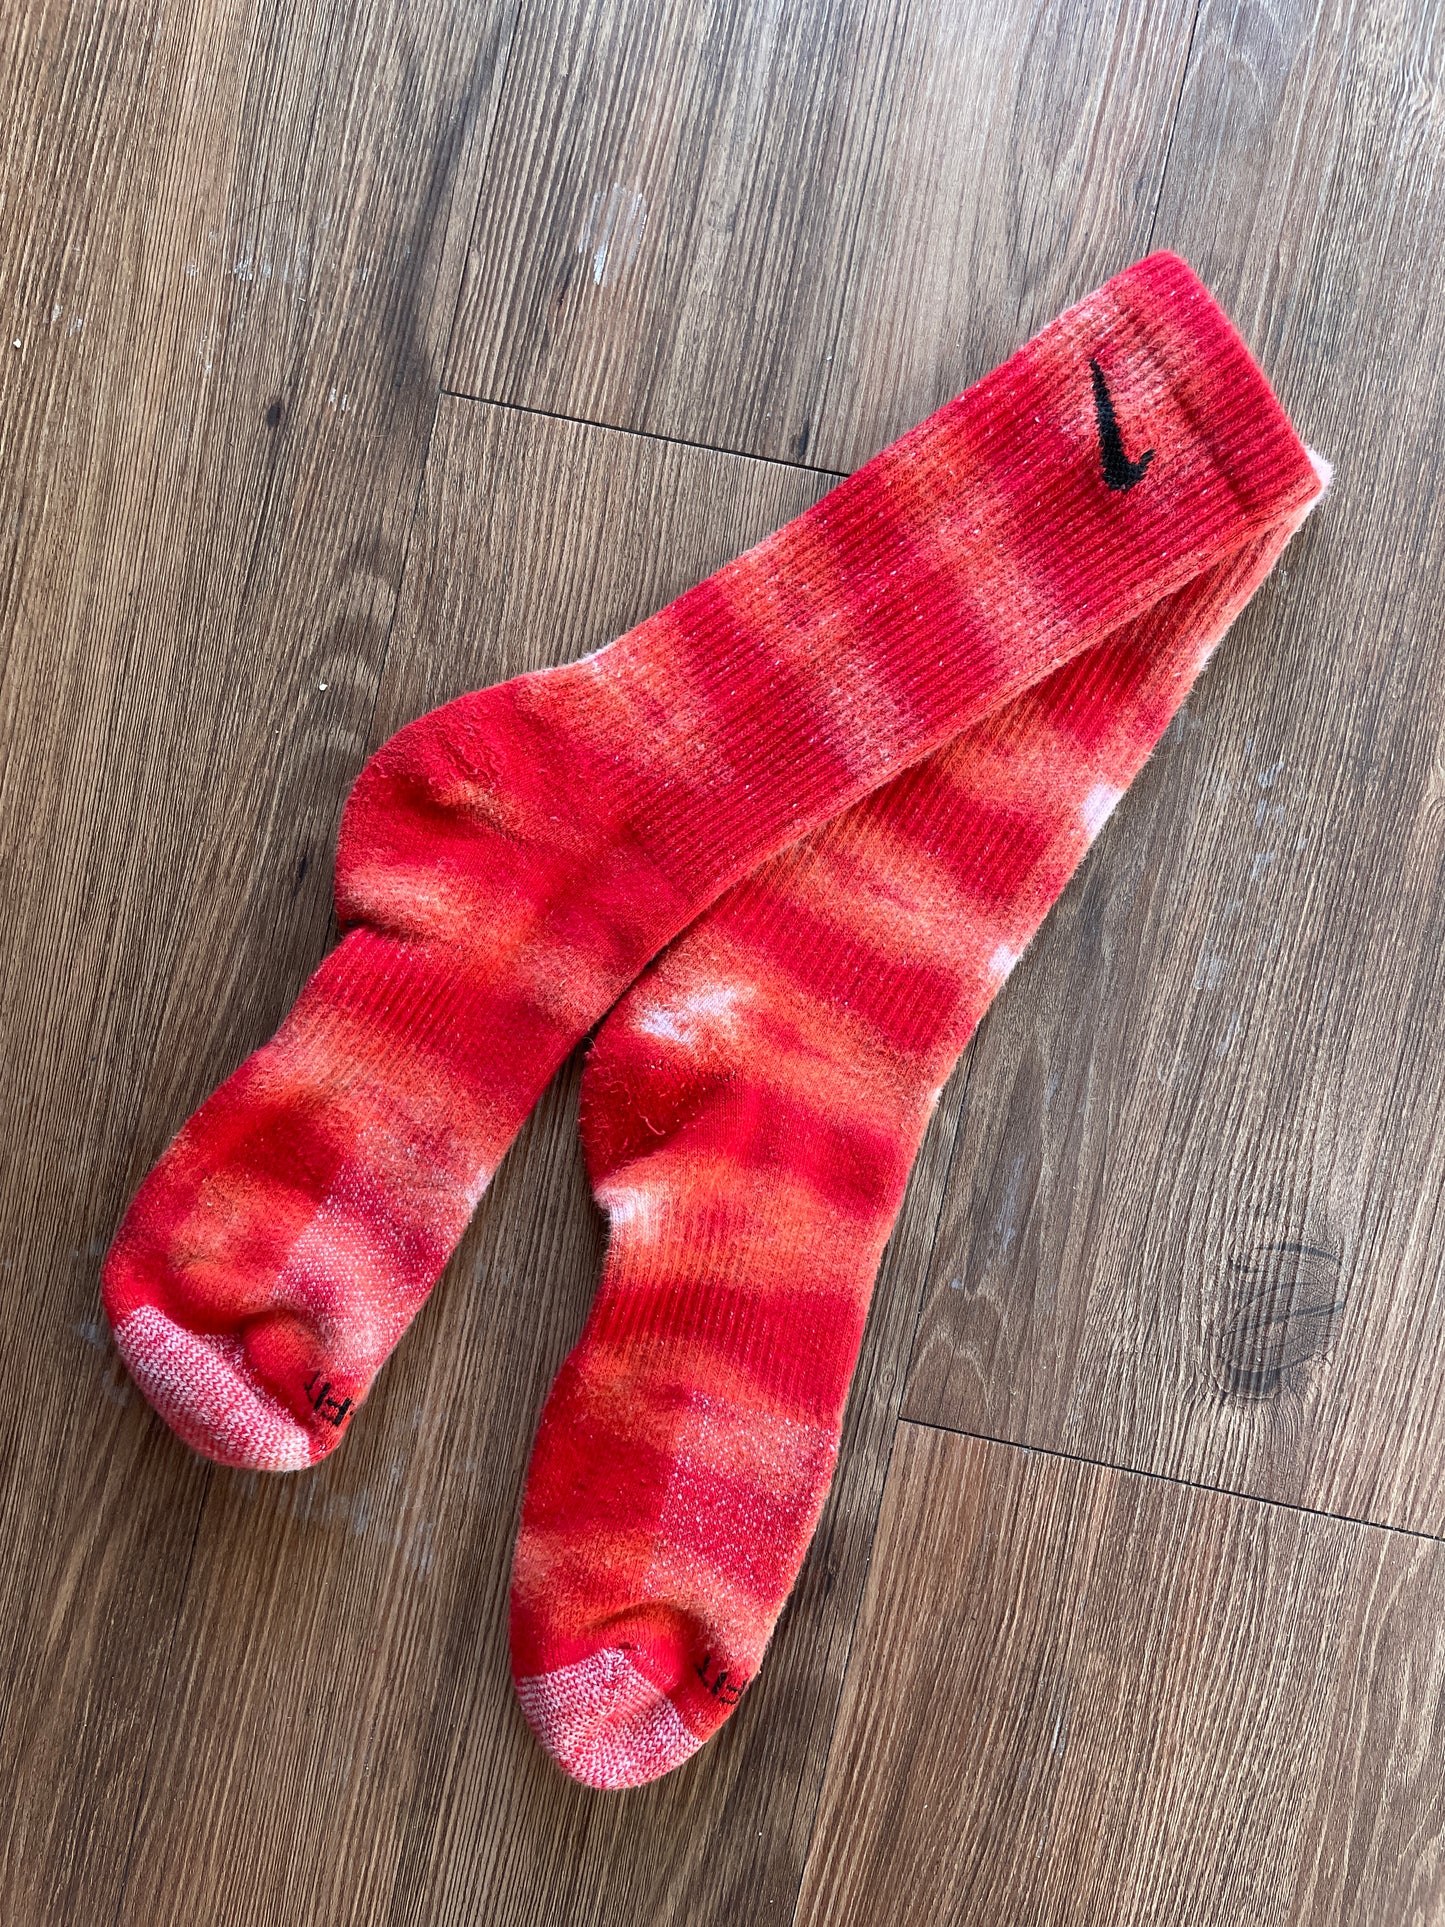 Red and White Tie Dye Nike Dri-FIT Everyday Plus Training Socks - Size Medium (Men's 6-8/Women's 7-10)